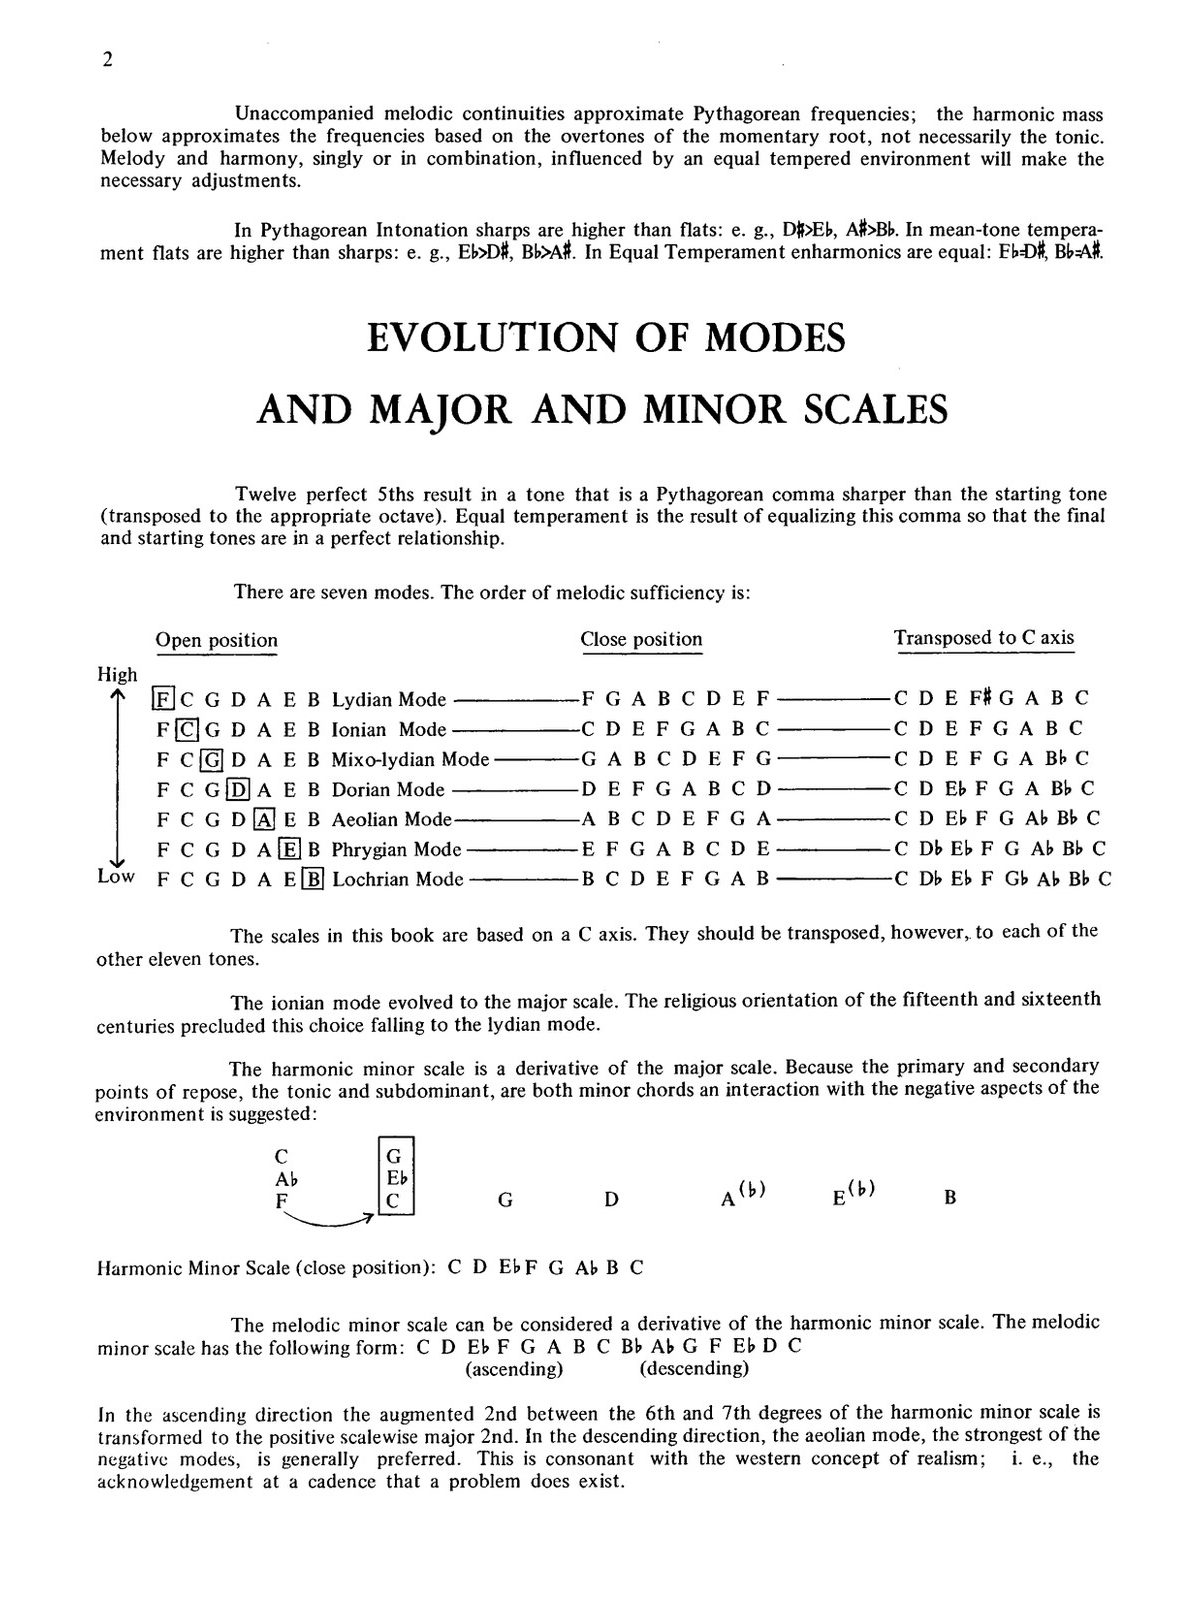 Deutsch, Lexicon of Symmetric Scales and Tonal Patterns-p04